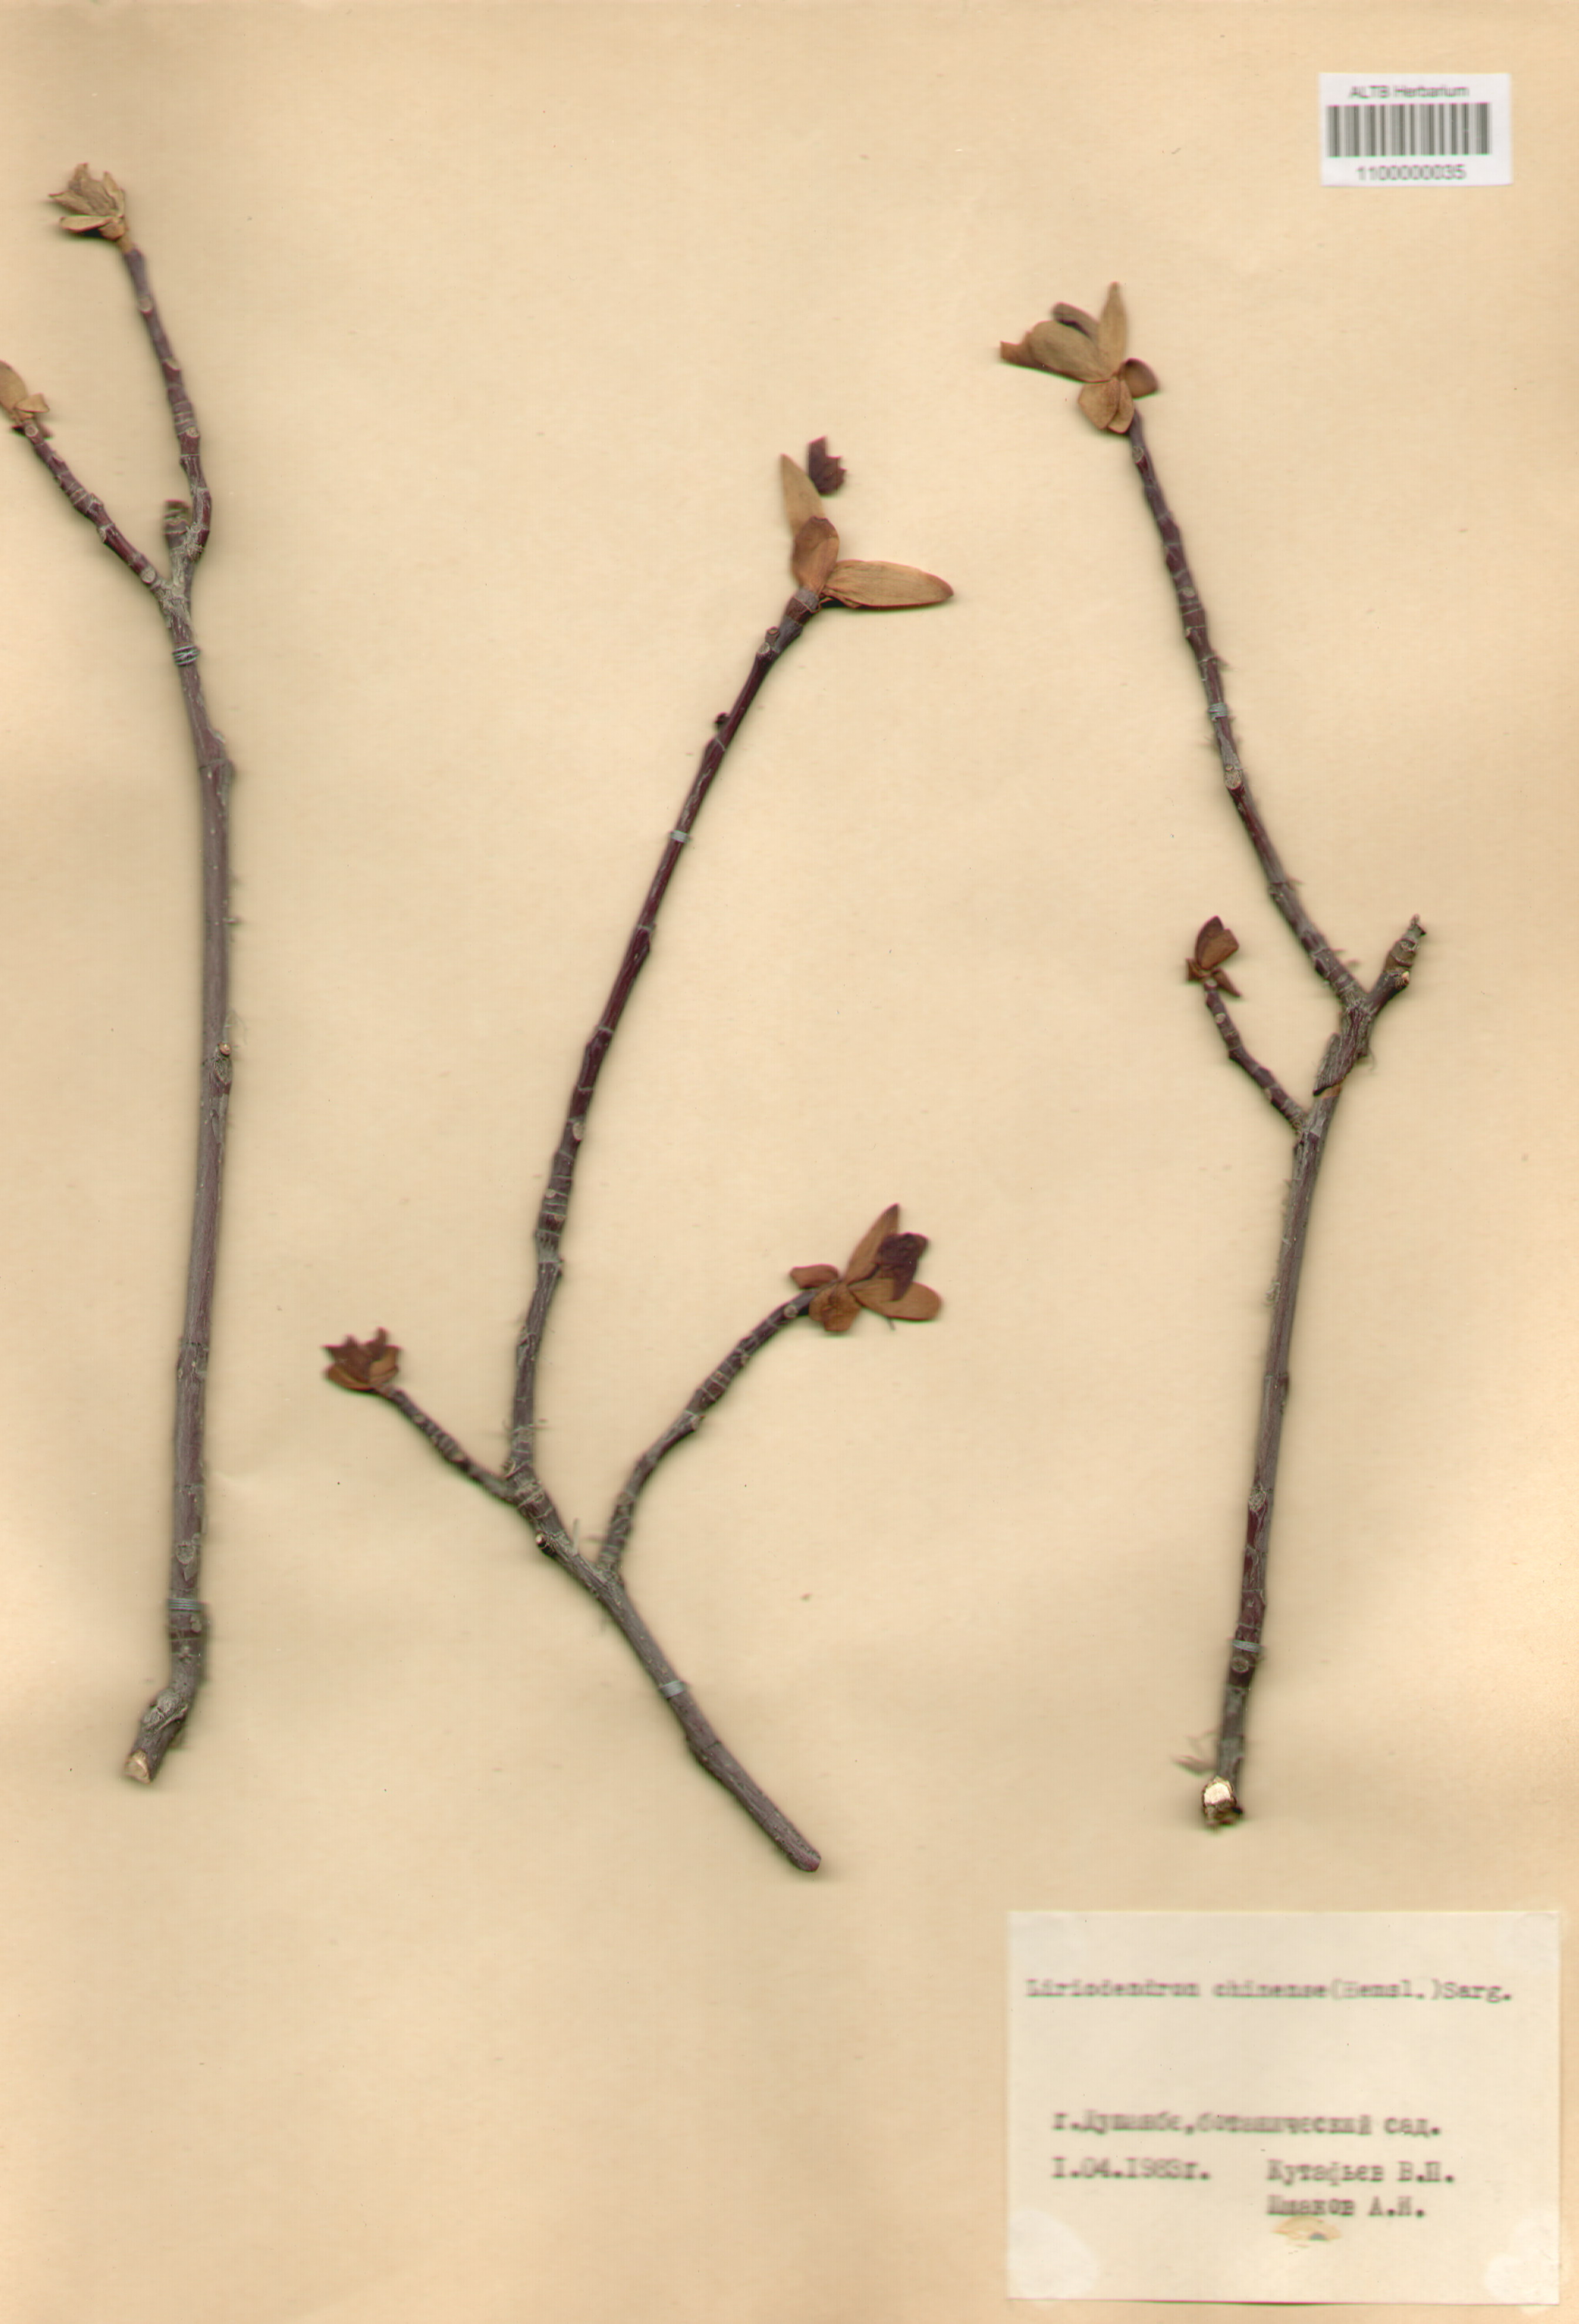 Magnoliaceae,Liliodendron chinense (Hemsl.) Sarg.